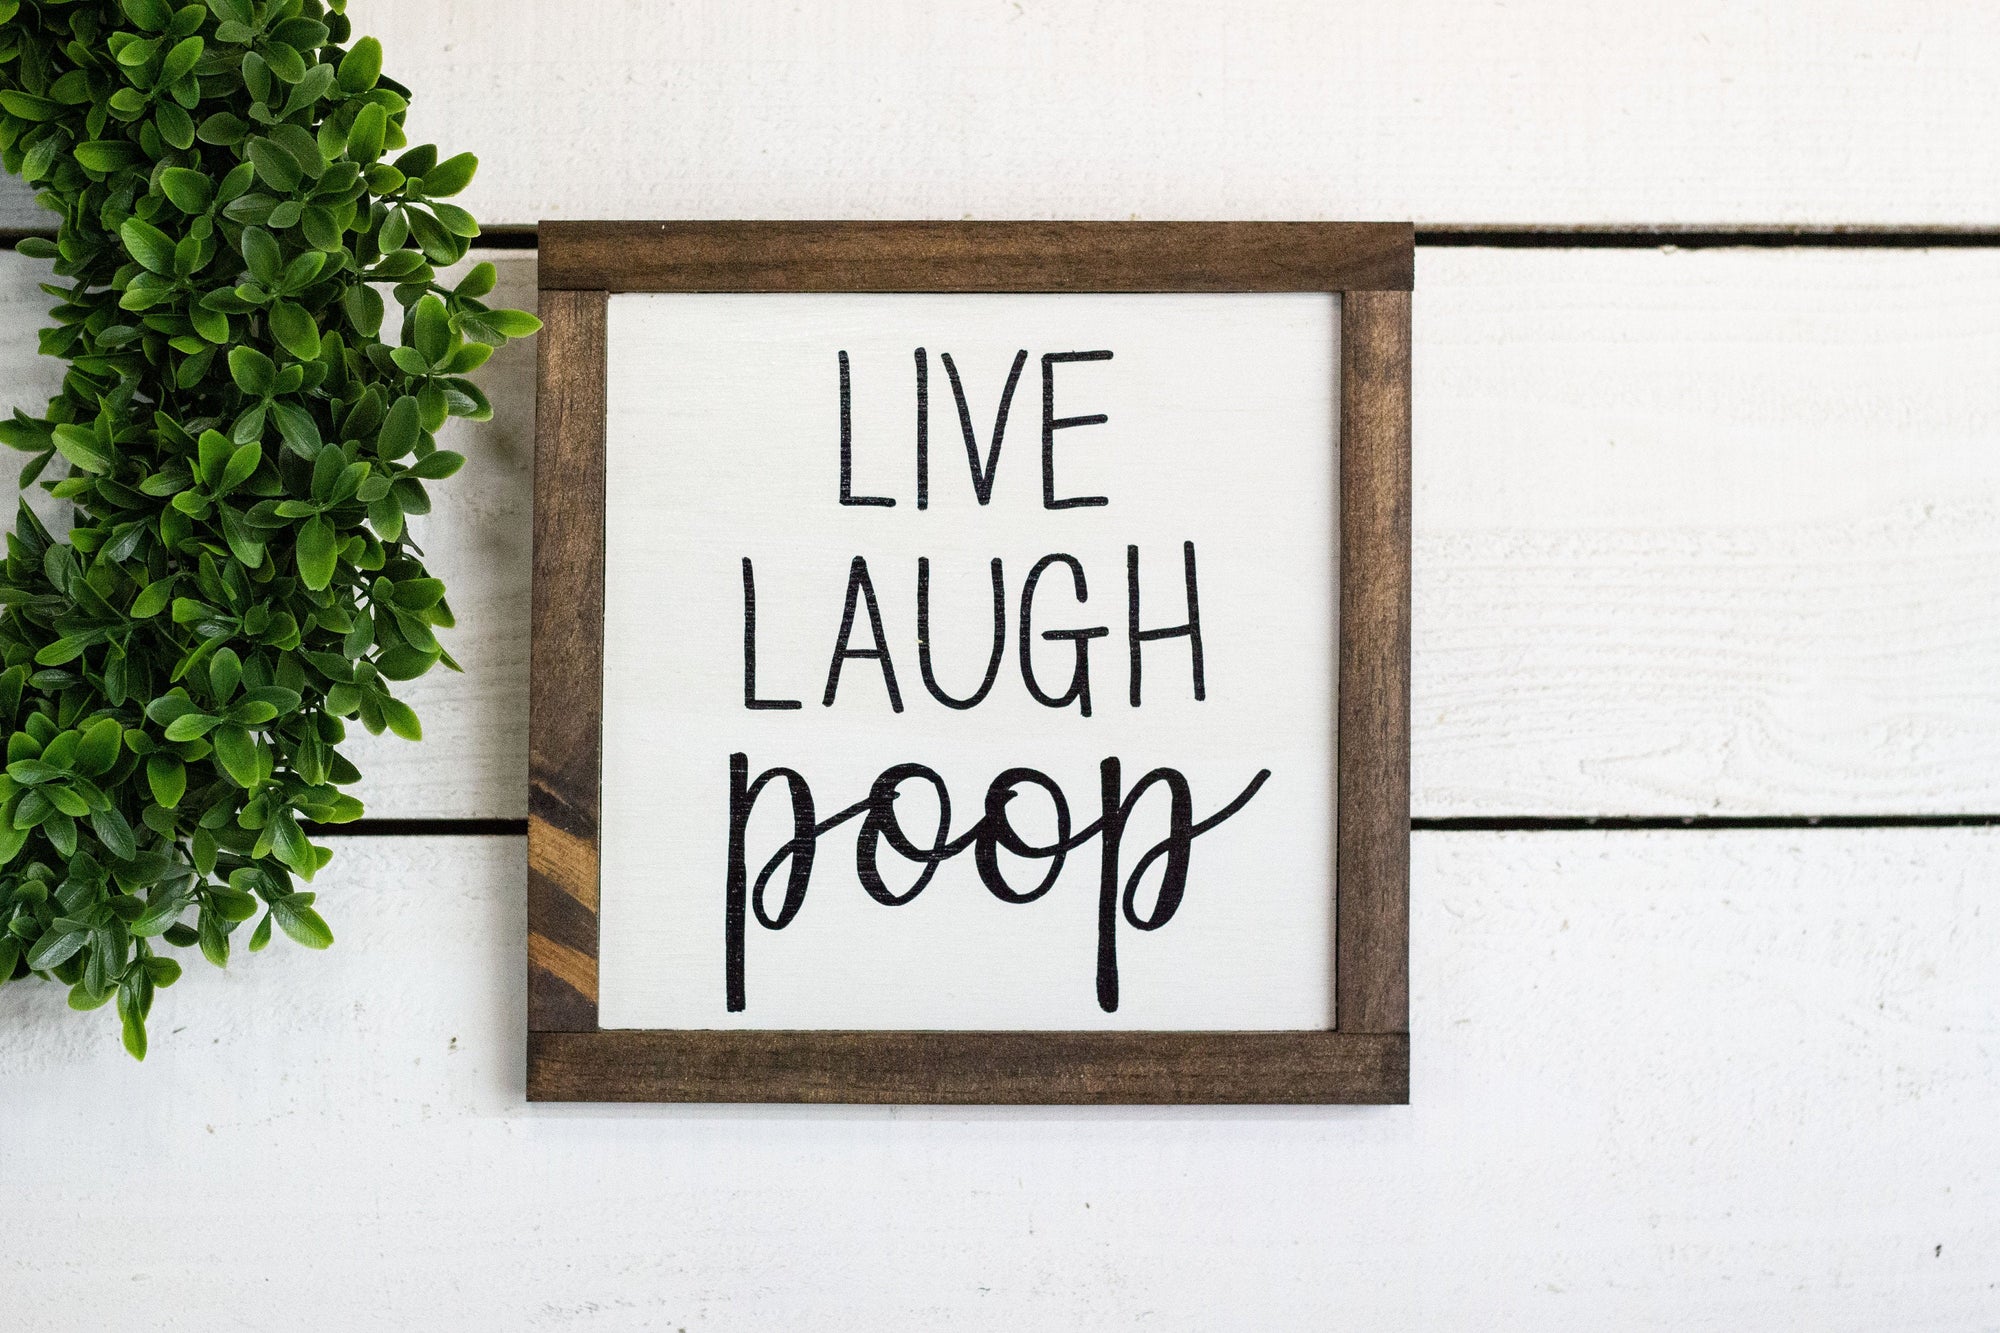 live laugh poop